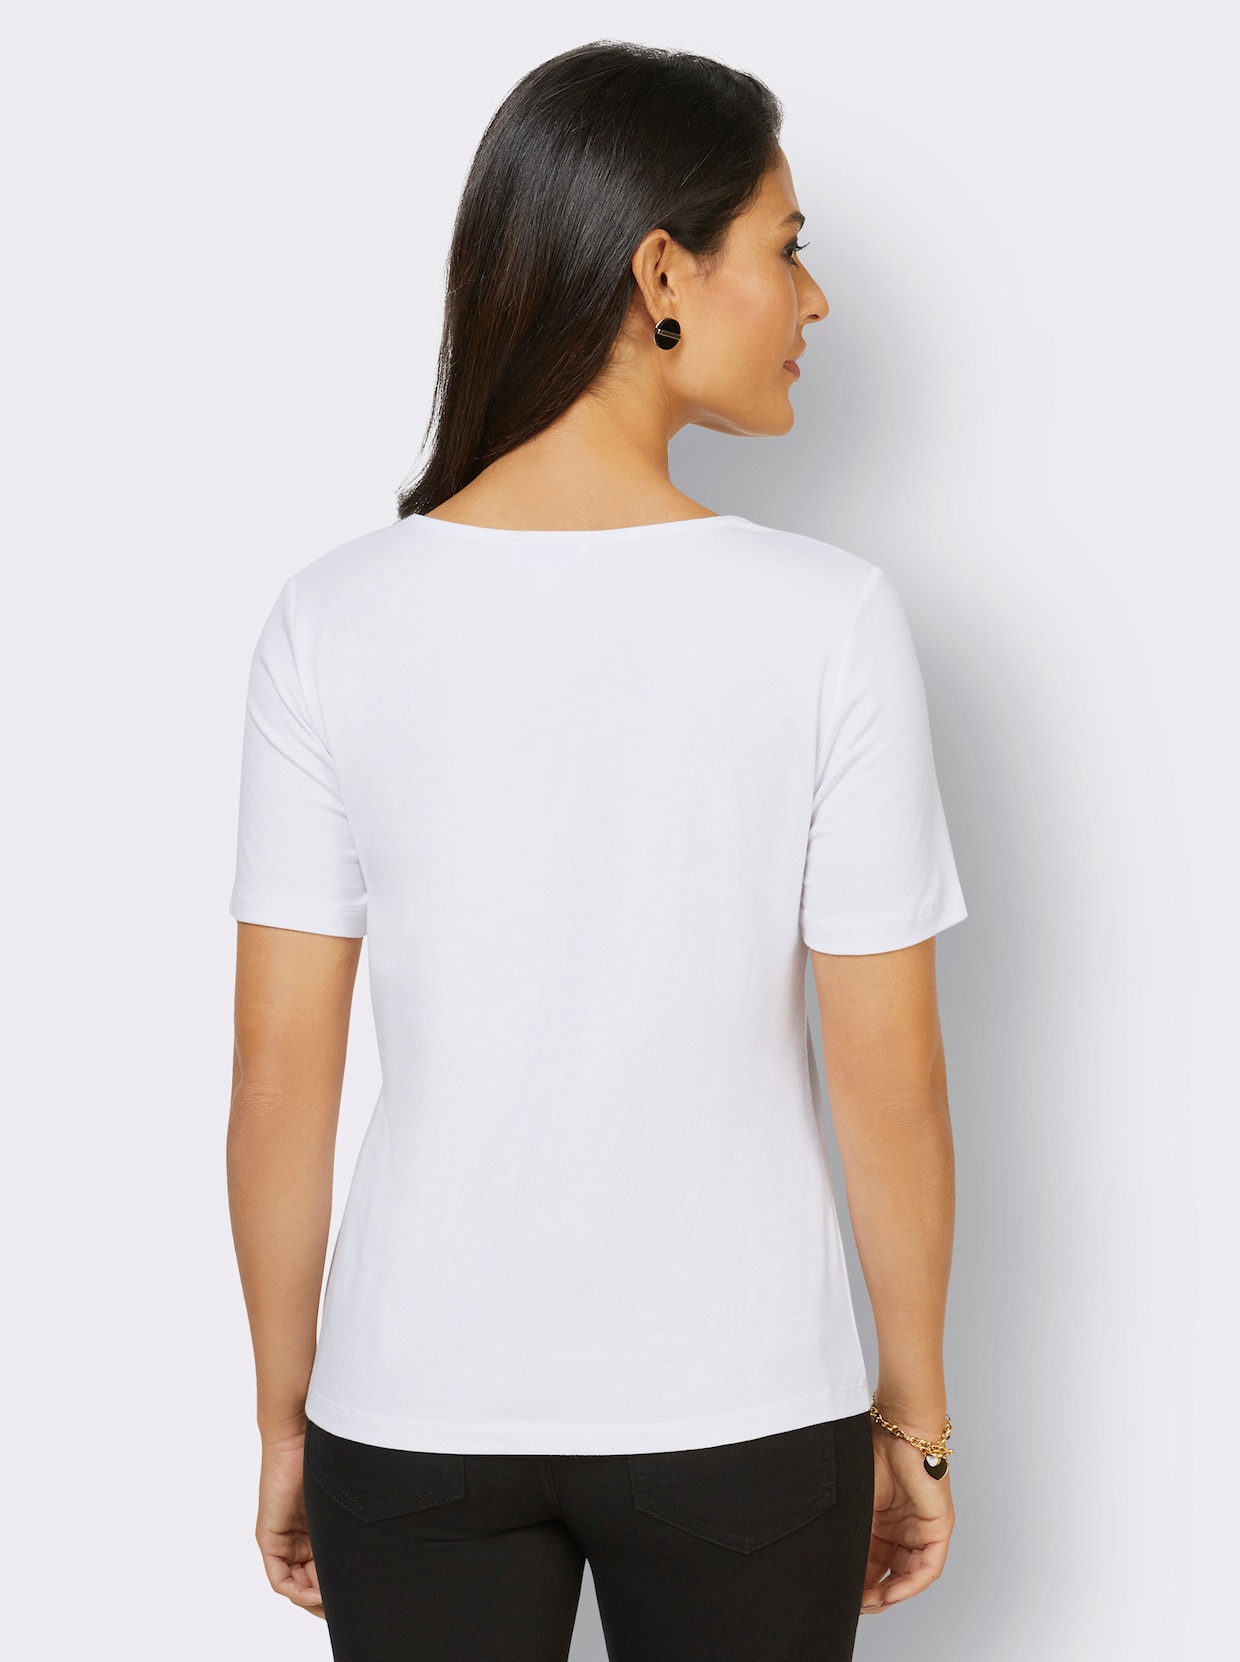 Modal-Baumwoll-Shirt - weiß